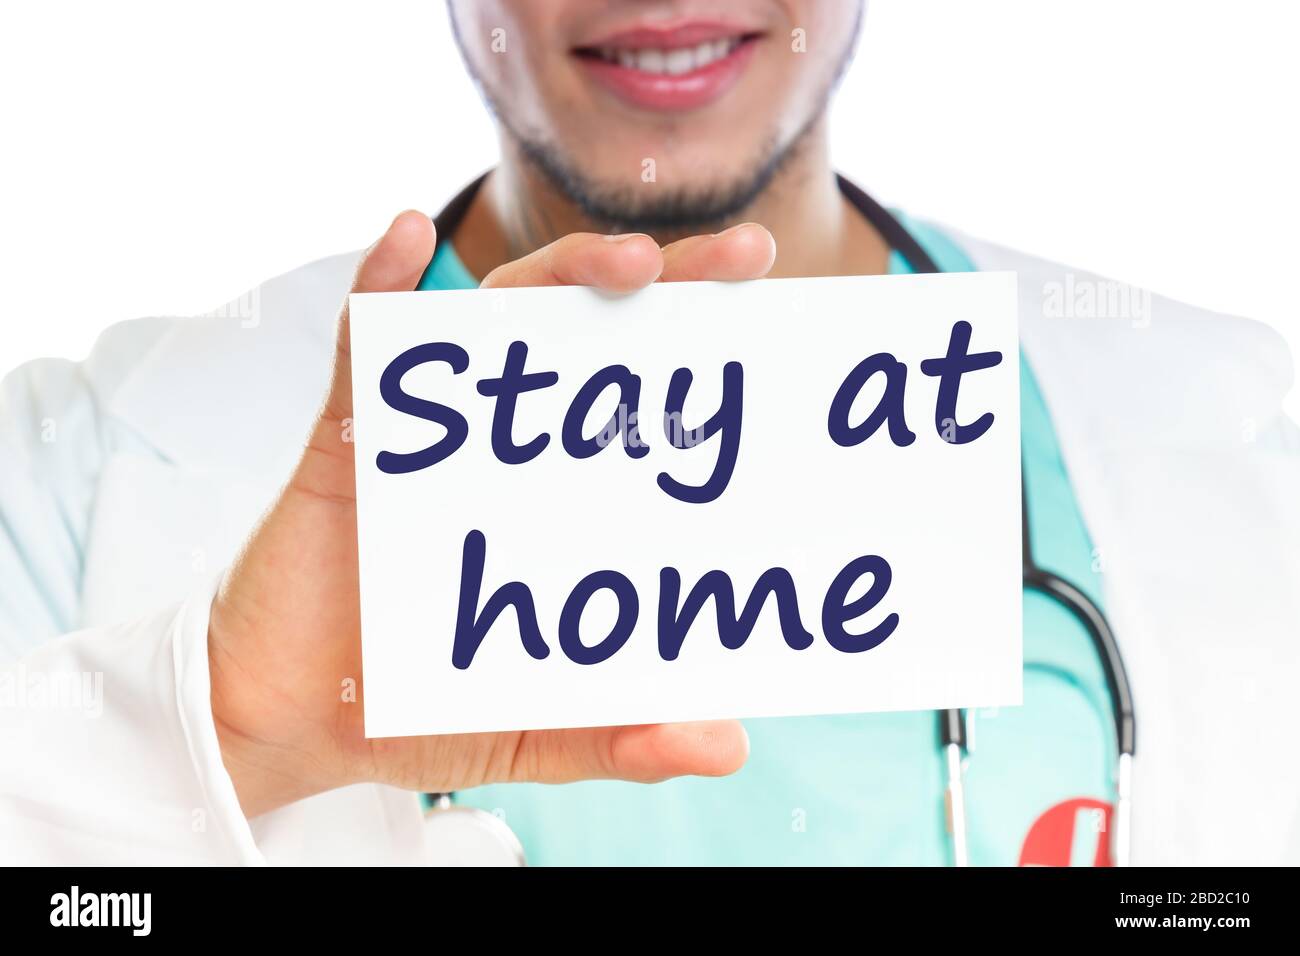 Stay at home Corona virus coronavirus disease doctor ill illness healthy health with sign Stock Photo